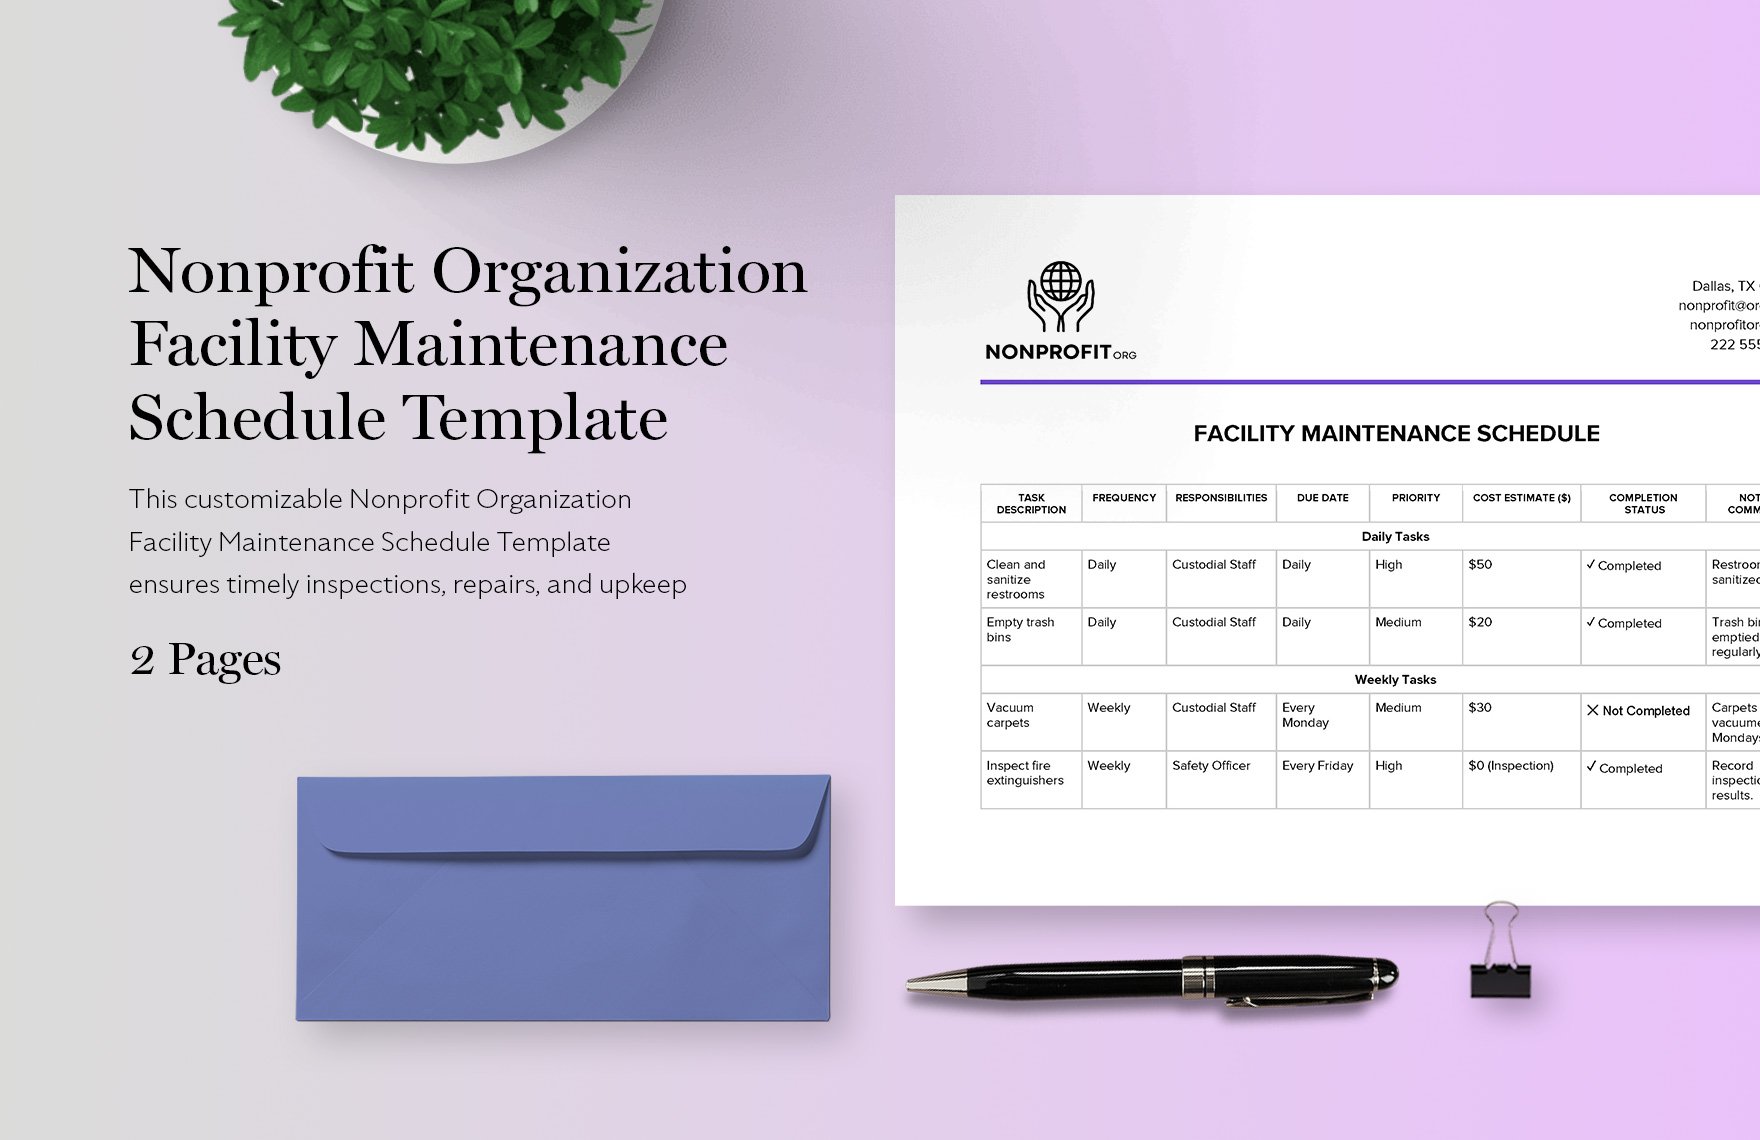 Nonprofit Organization Facility Maintenance Schedule Template